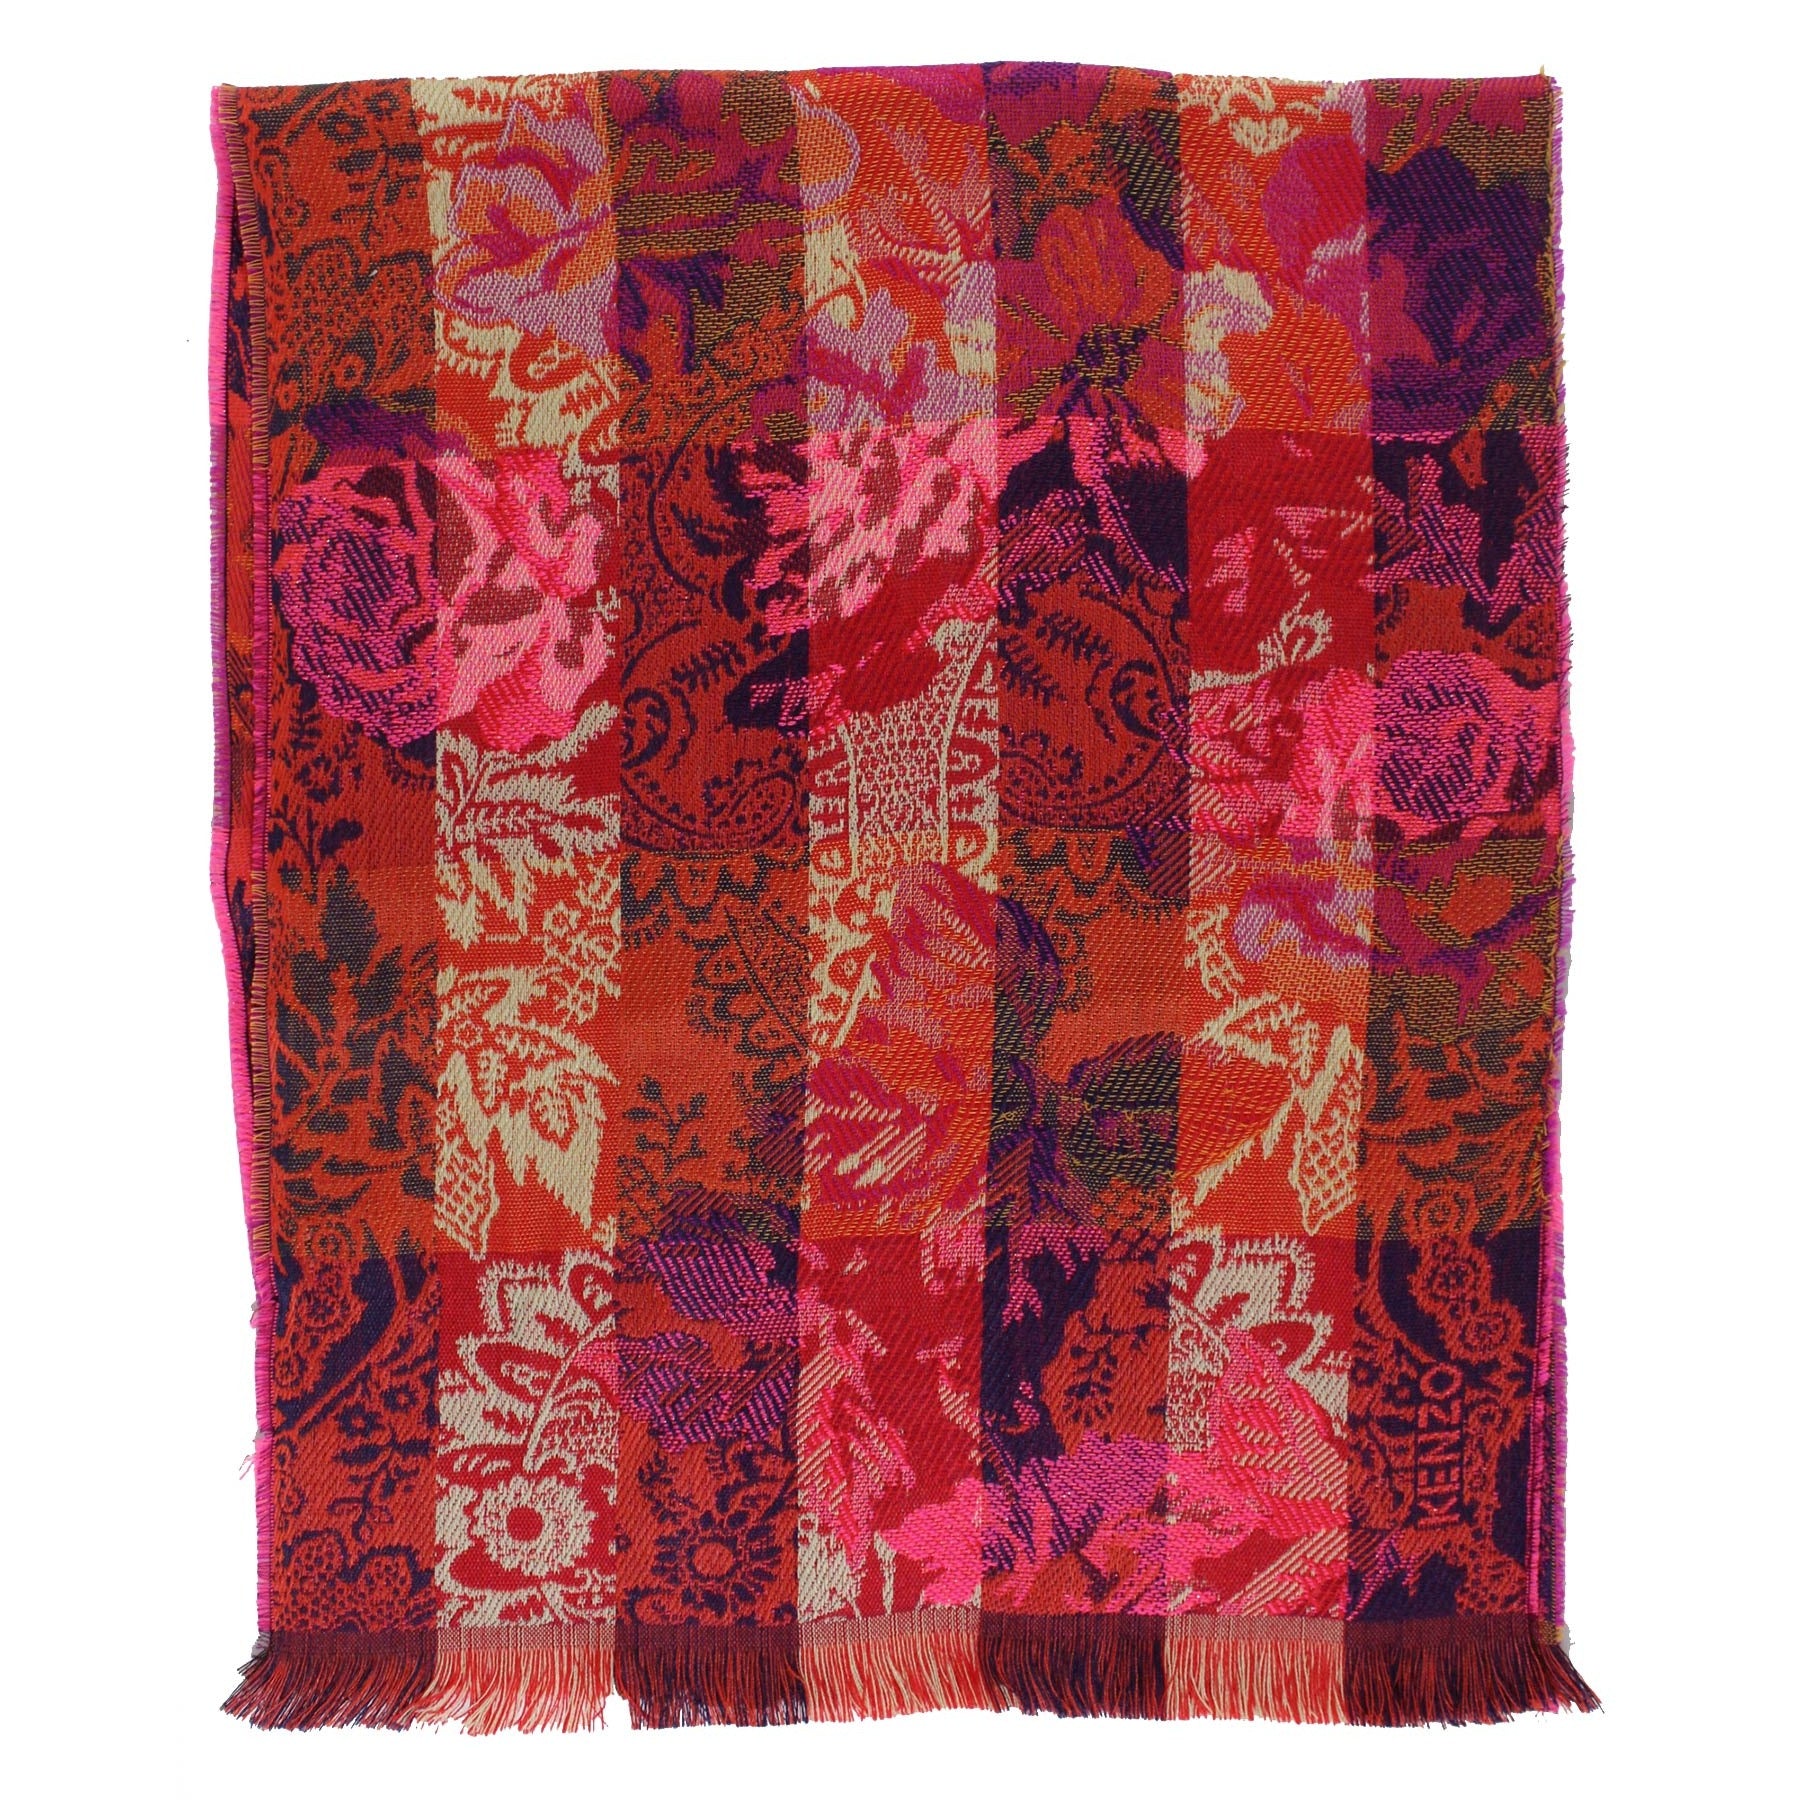 Kenzo Scarf Pink Red Yellow Floral Design - Wool Silk Shawl